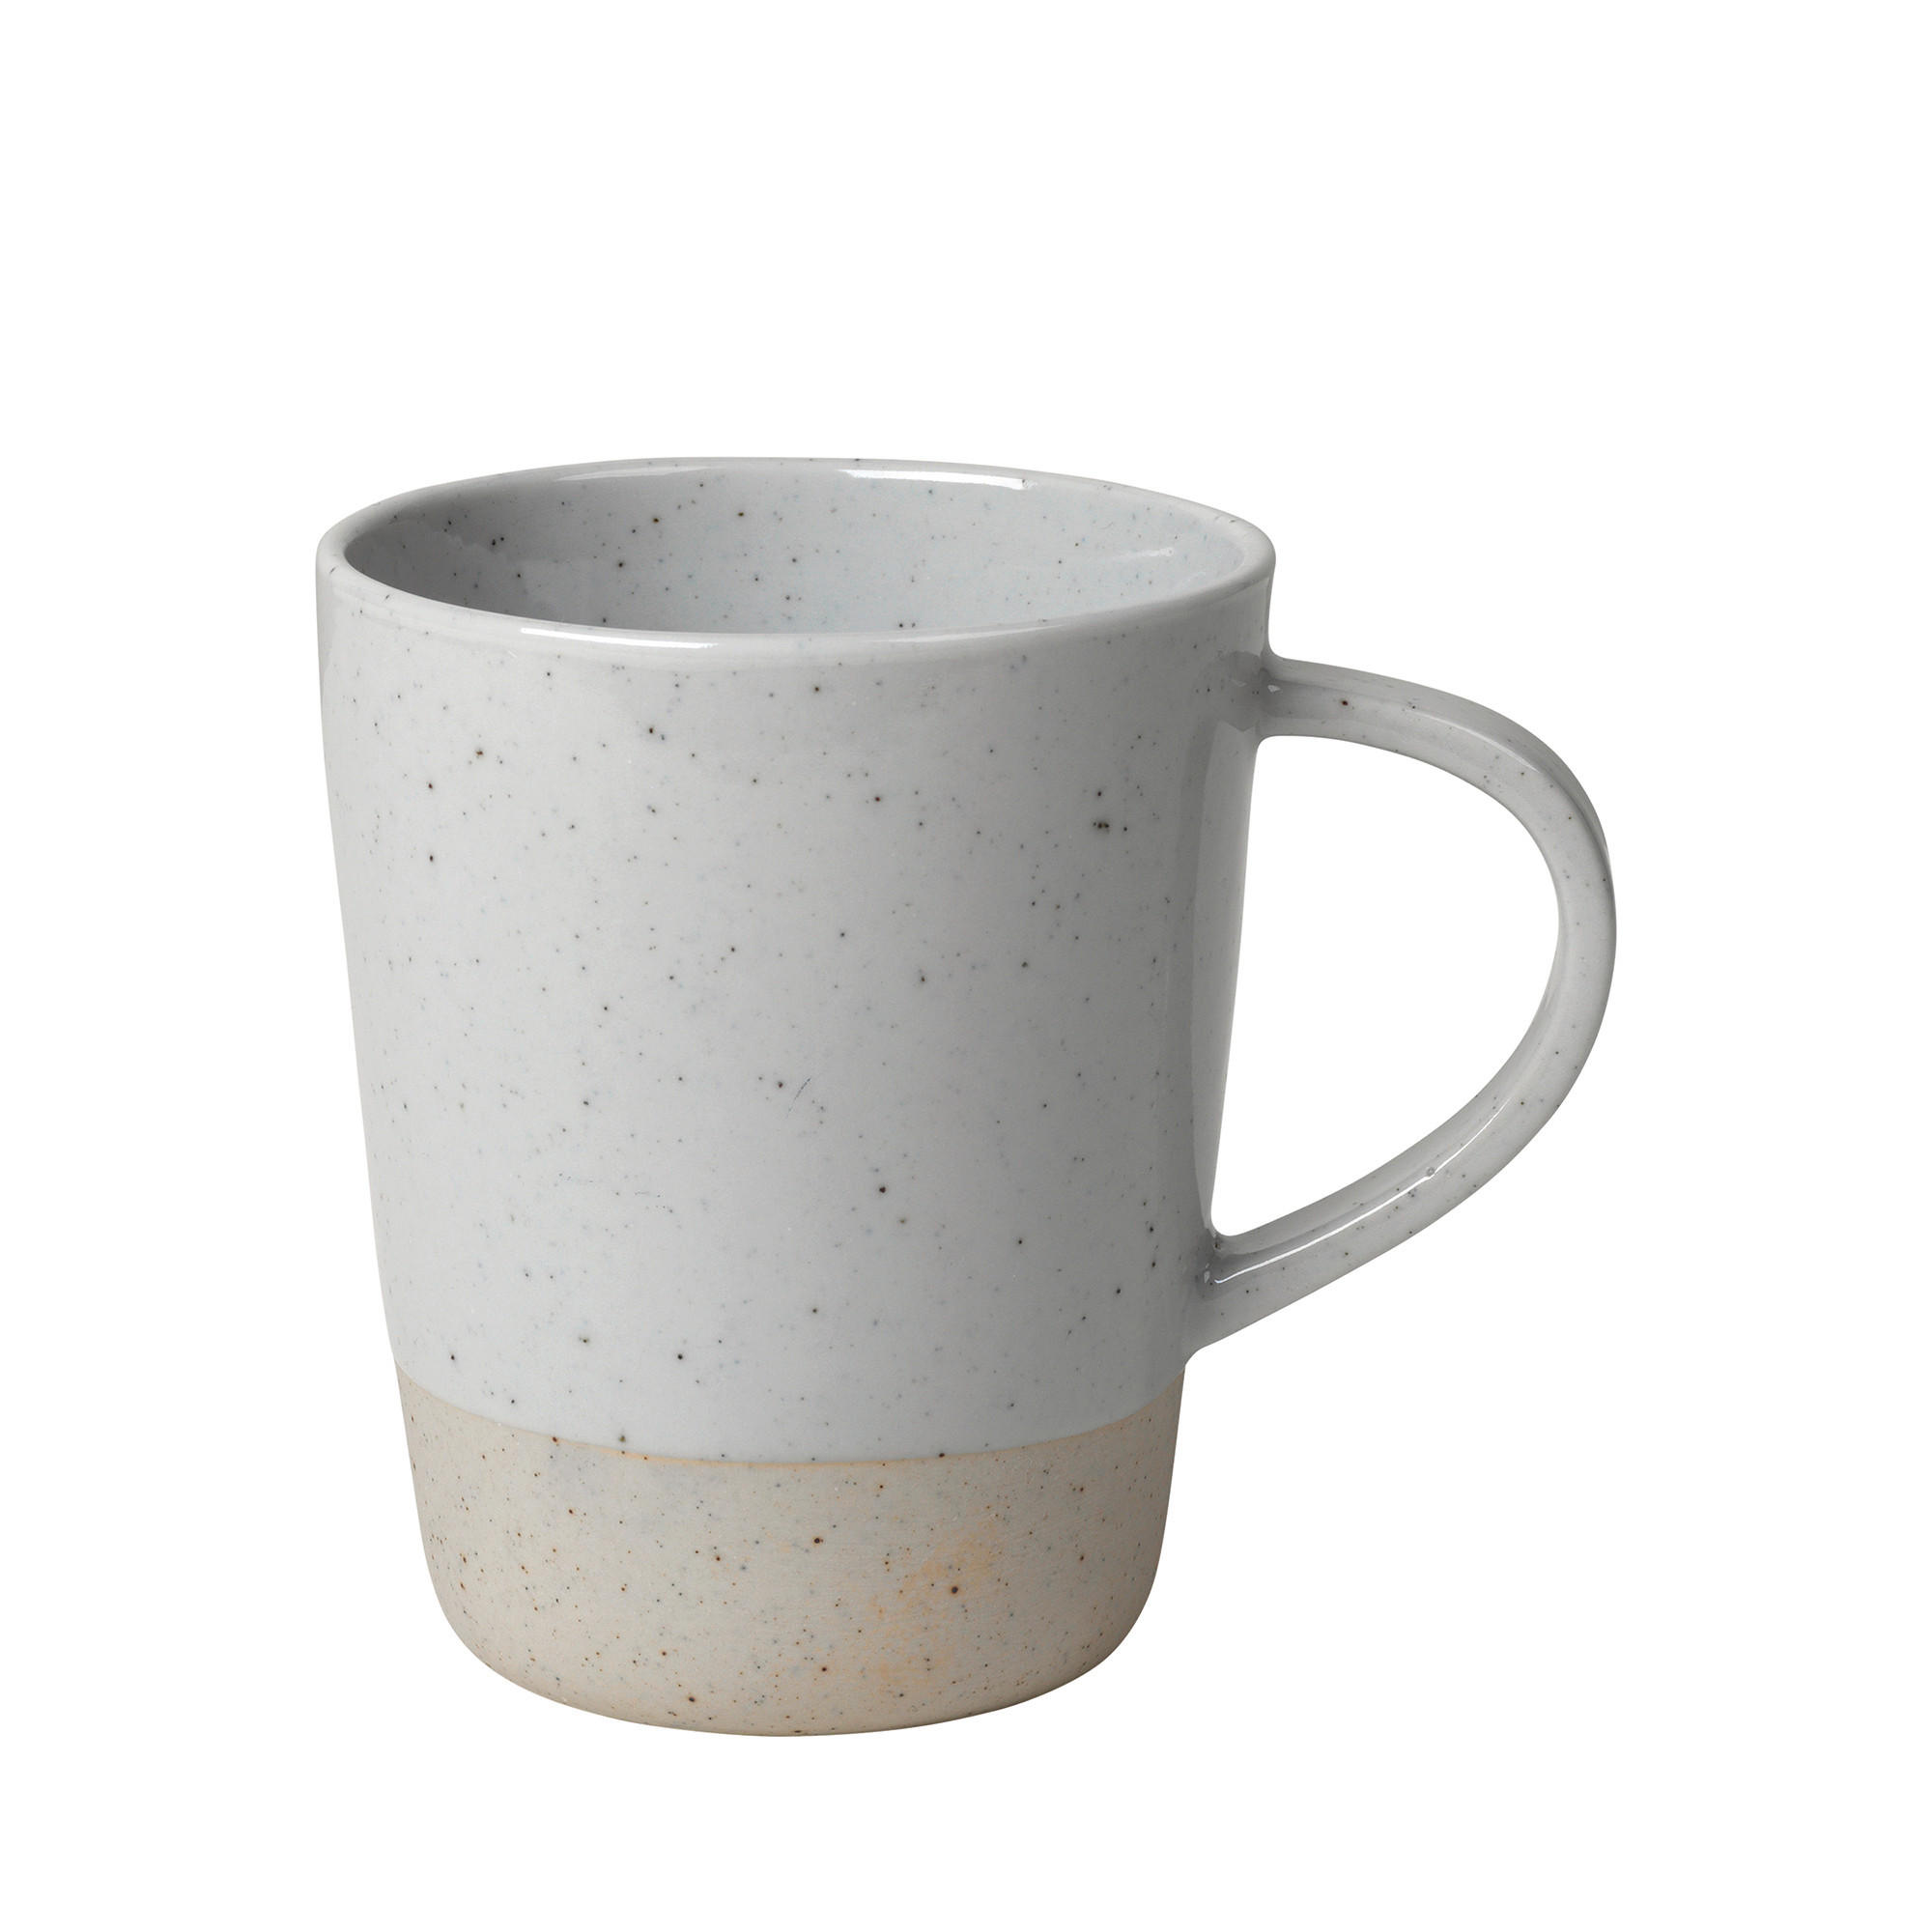 KAFFEEBECHER  - Beige/Grau, Design, Keramik (8/11cm) - Blomus